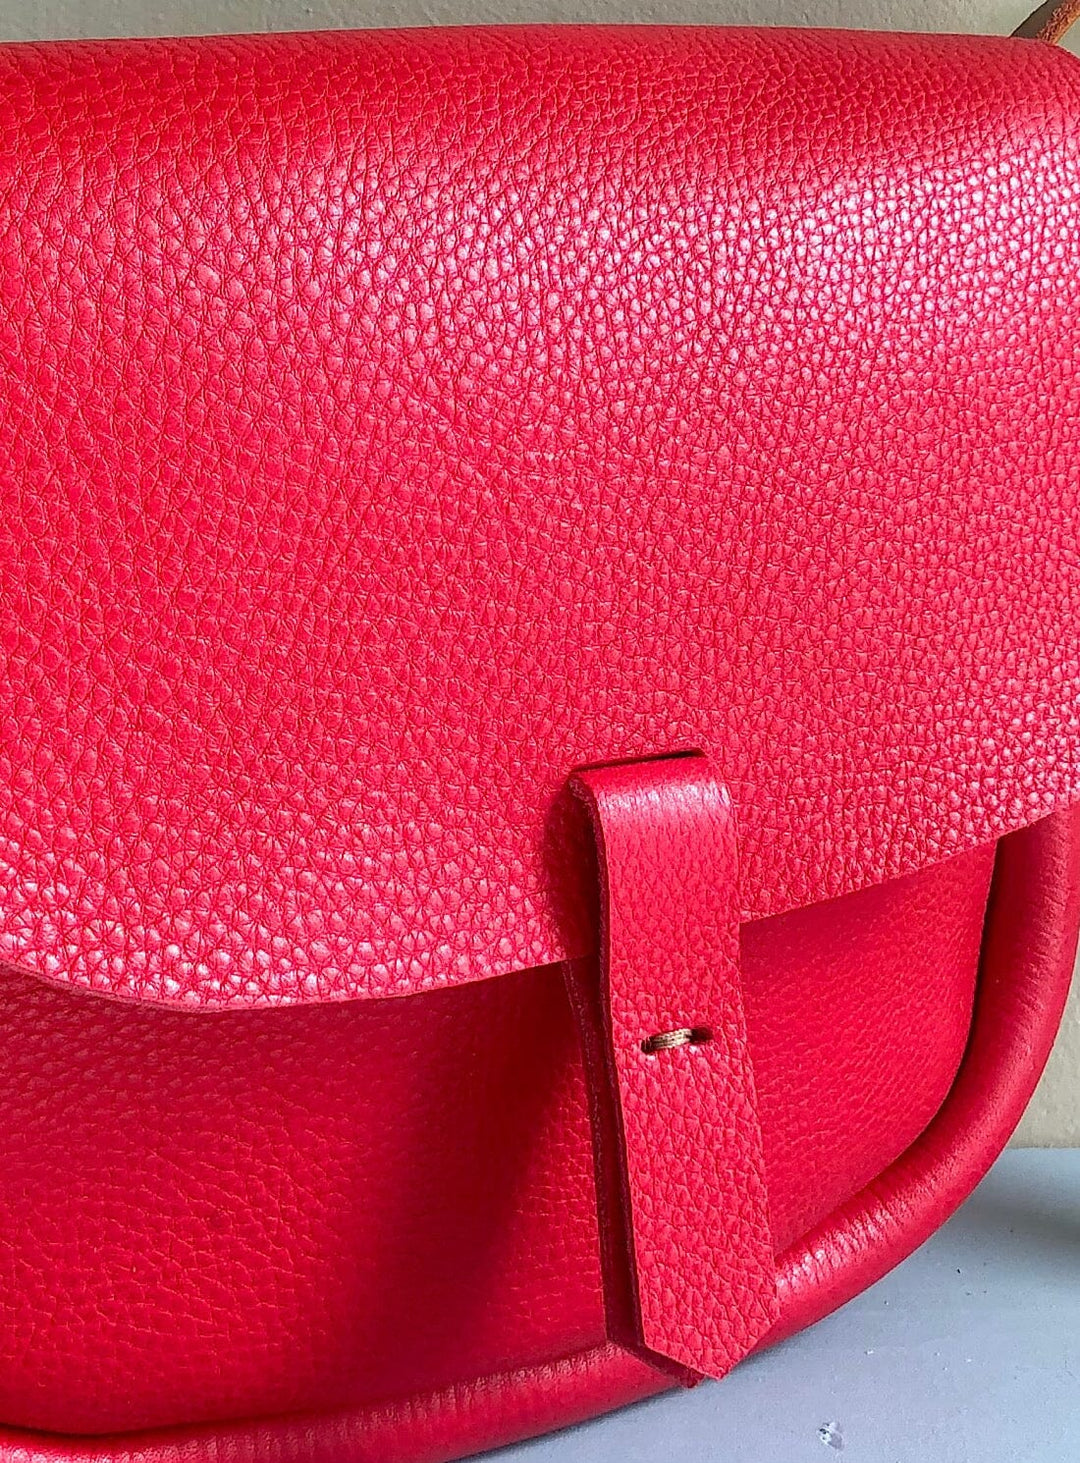 Iza Satchel in Happy Red with Tan Strap Handbags YBDFinds 